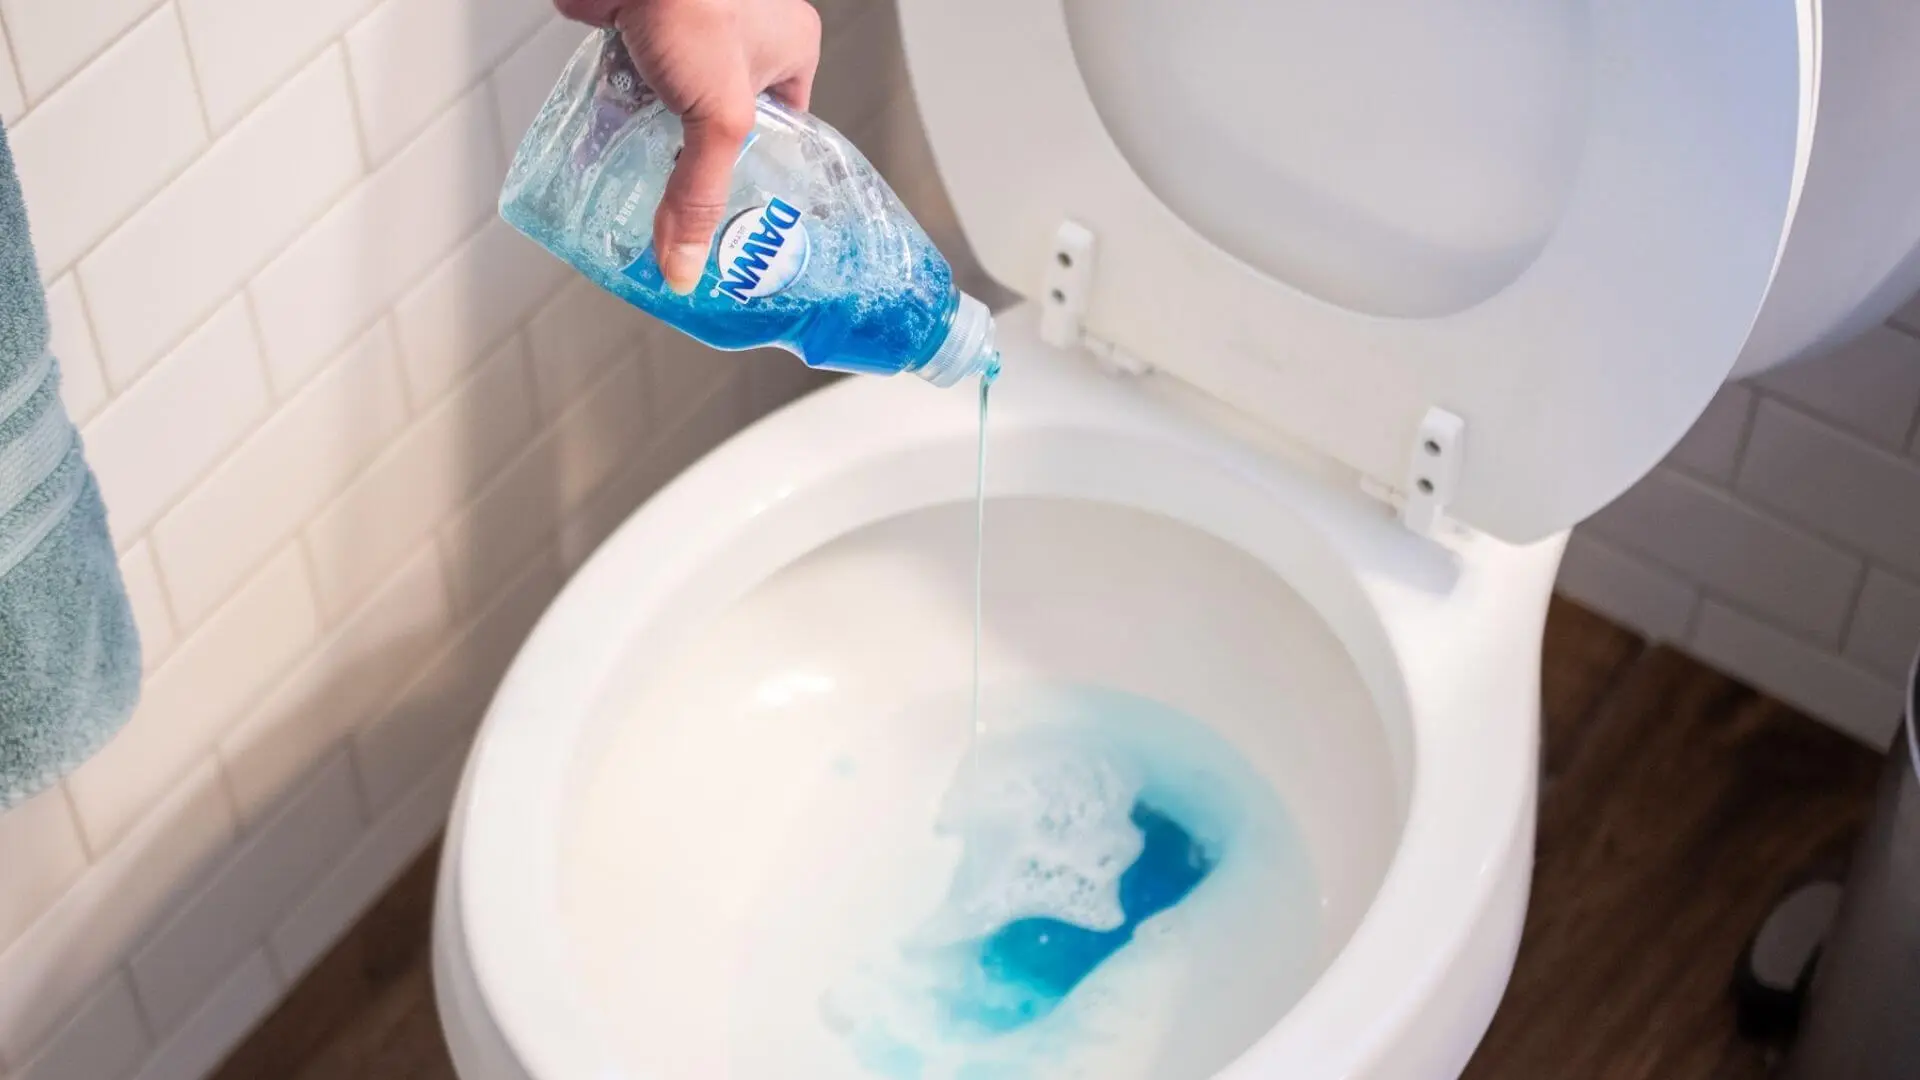 https://zeve.au/wp/uploads/2021/11/removing-toilet-blockage-with-dish-soap.jpg